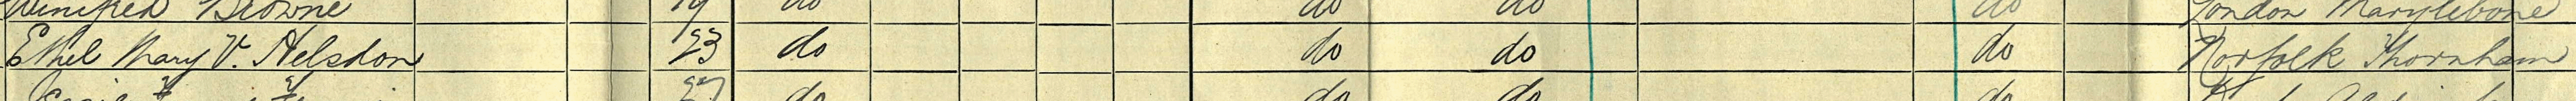 ethel helsdon 1911 census